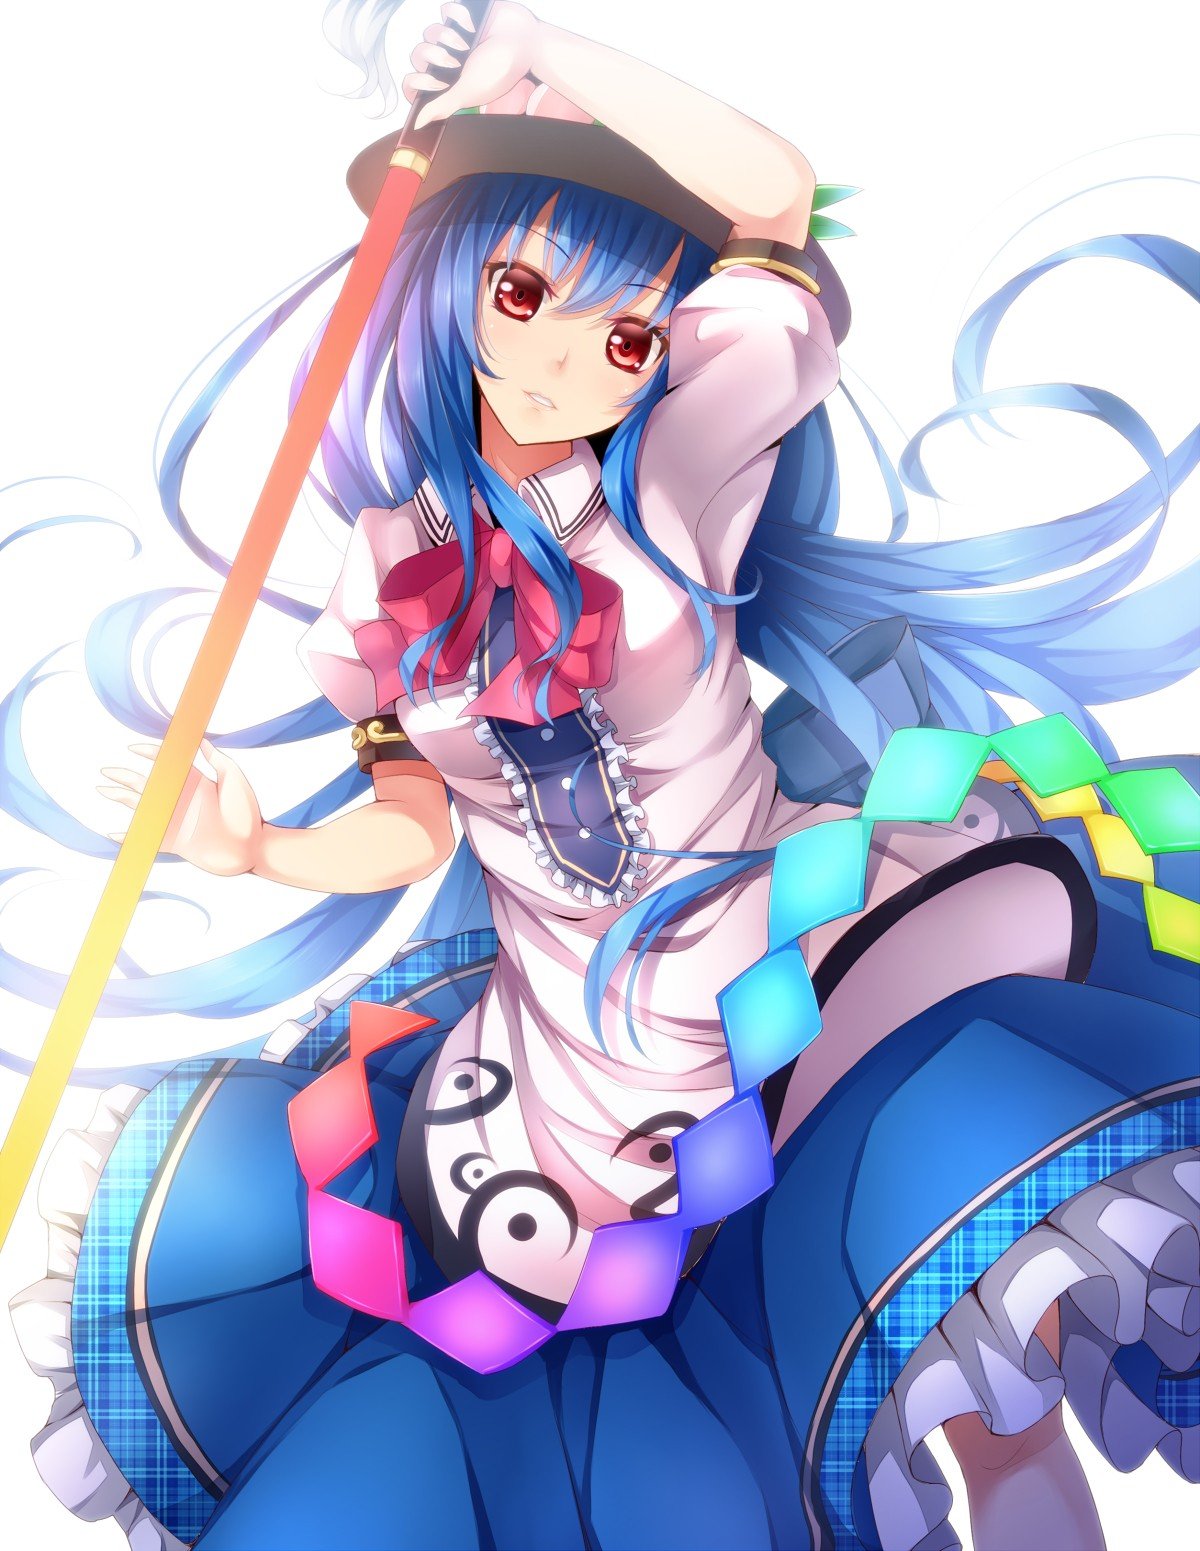 woman blue hair with Anime